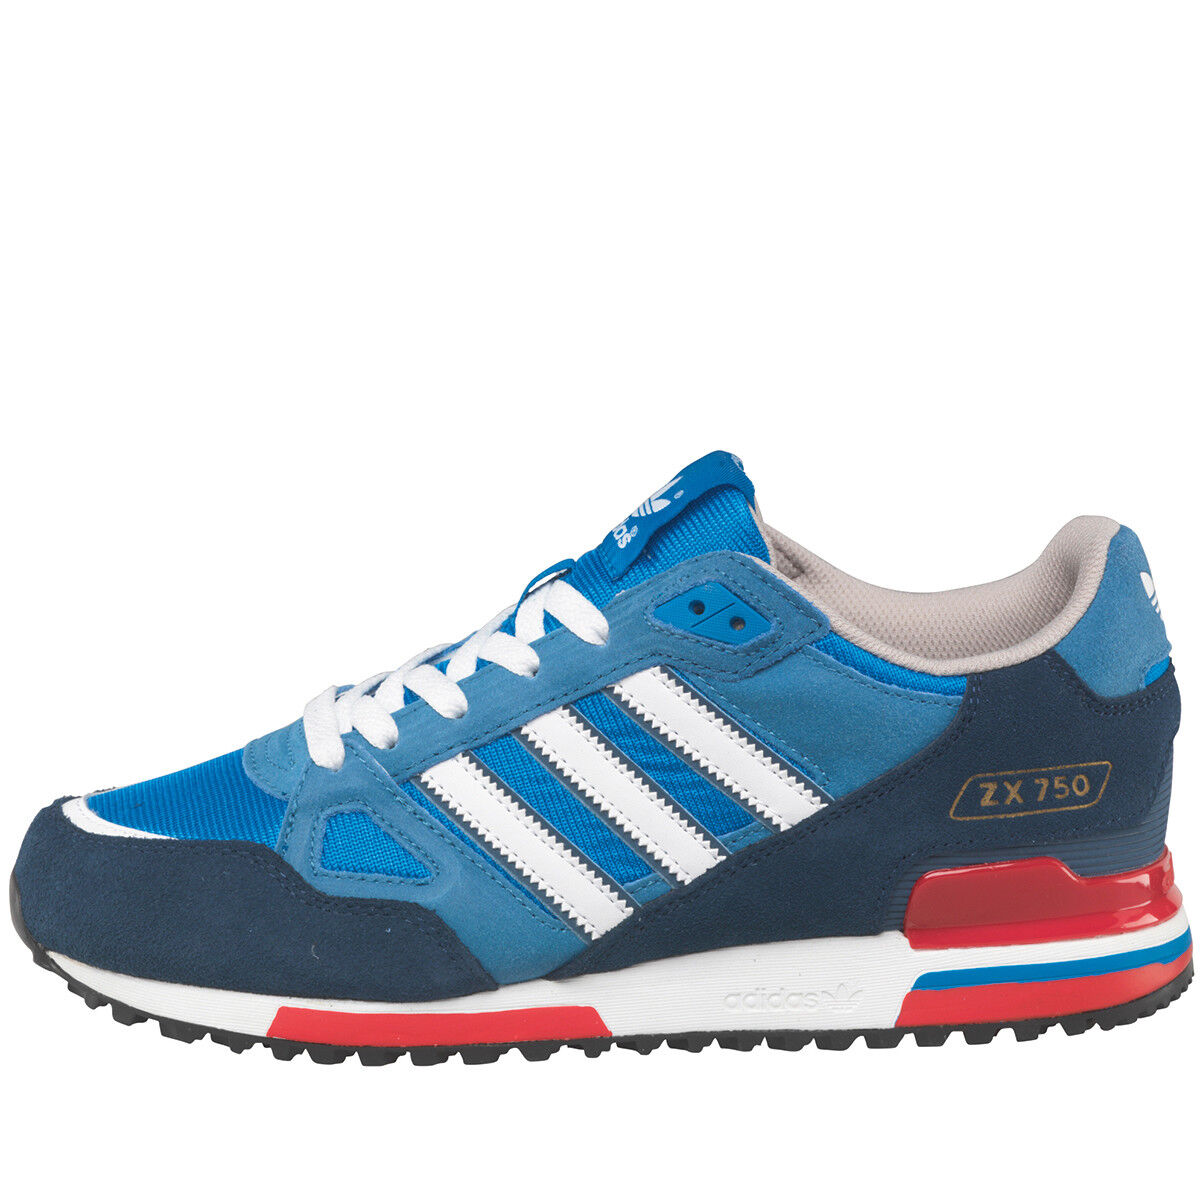 Adidas Original Mens Zx 750 Sneakers Bluebird/Blue/Navy/Red/White/White/Blue  | eBay